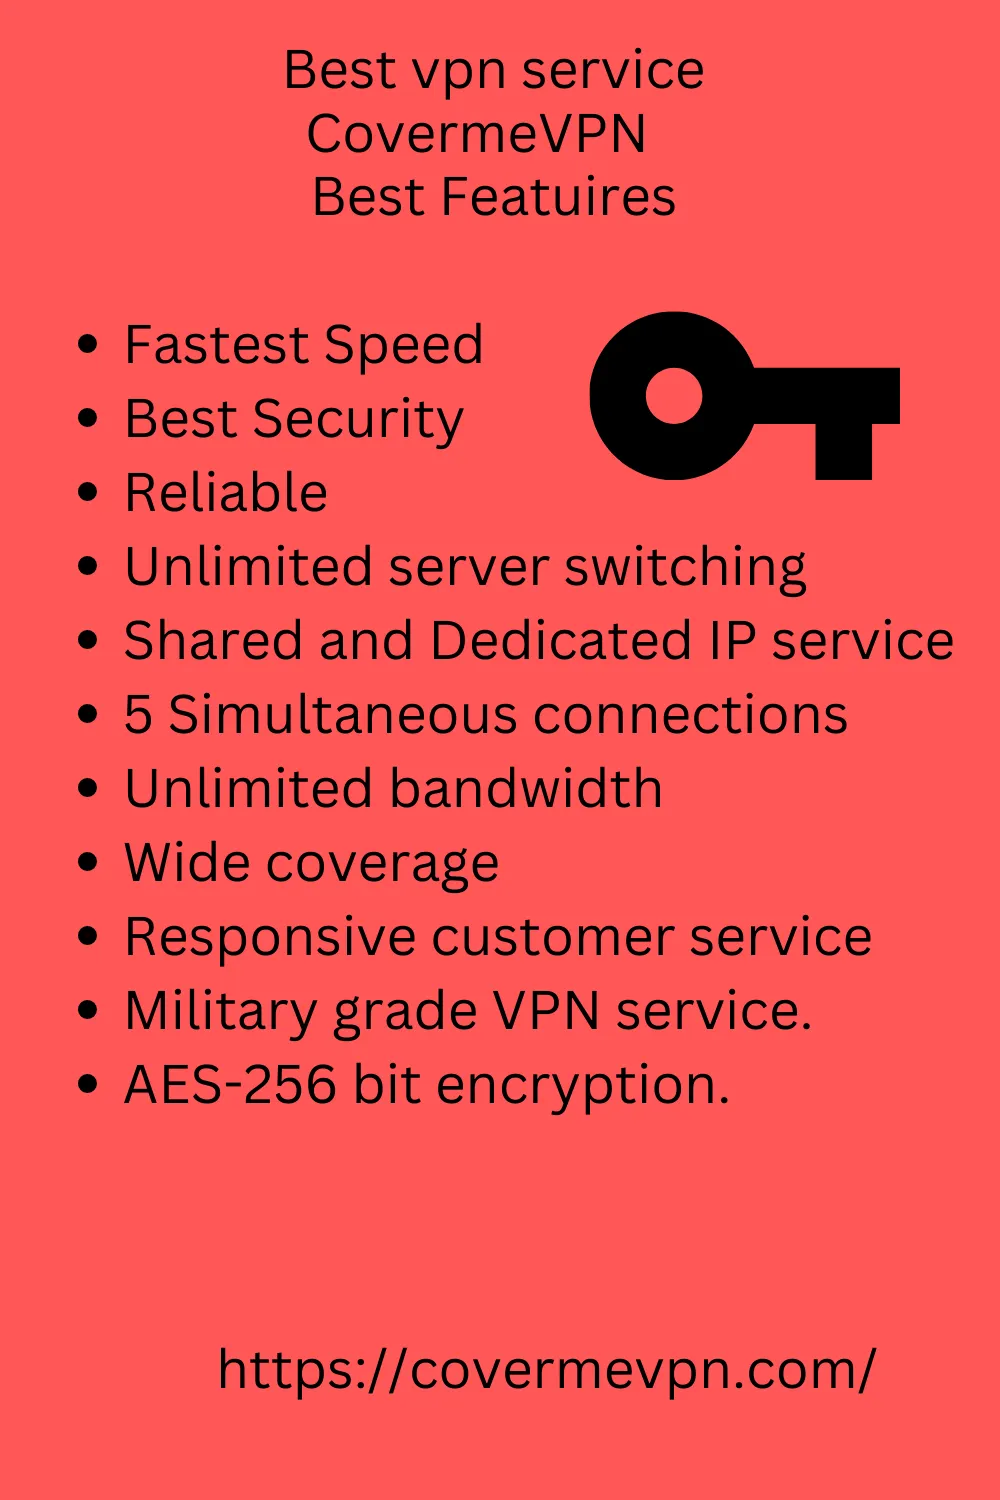 Best VPN service review. 